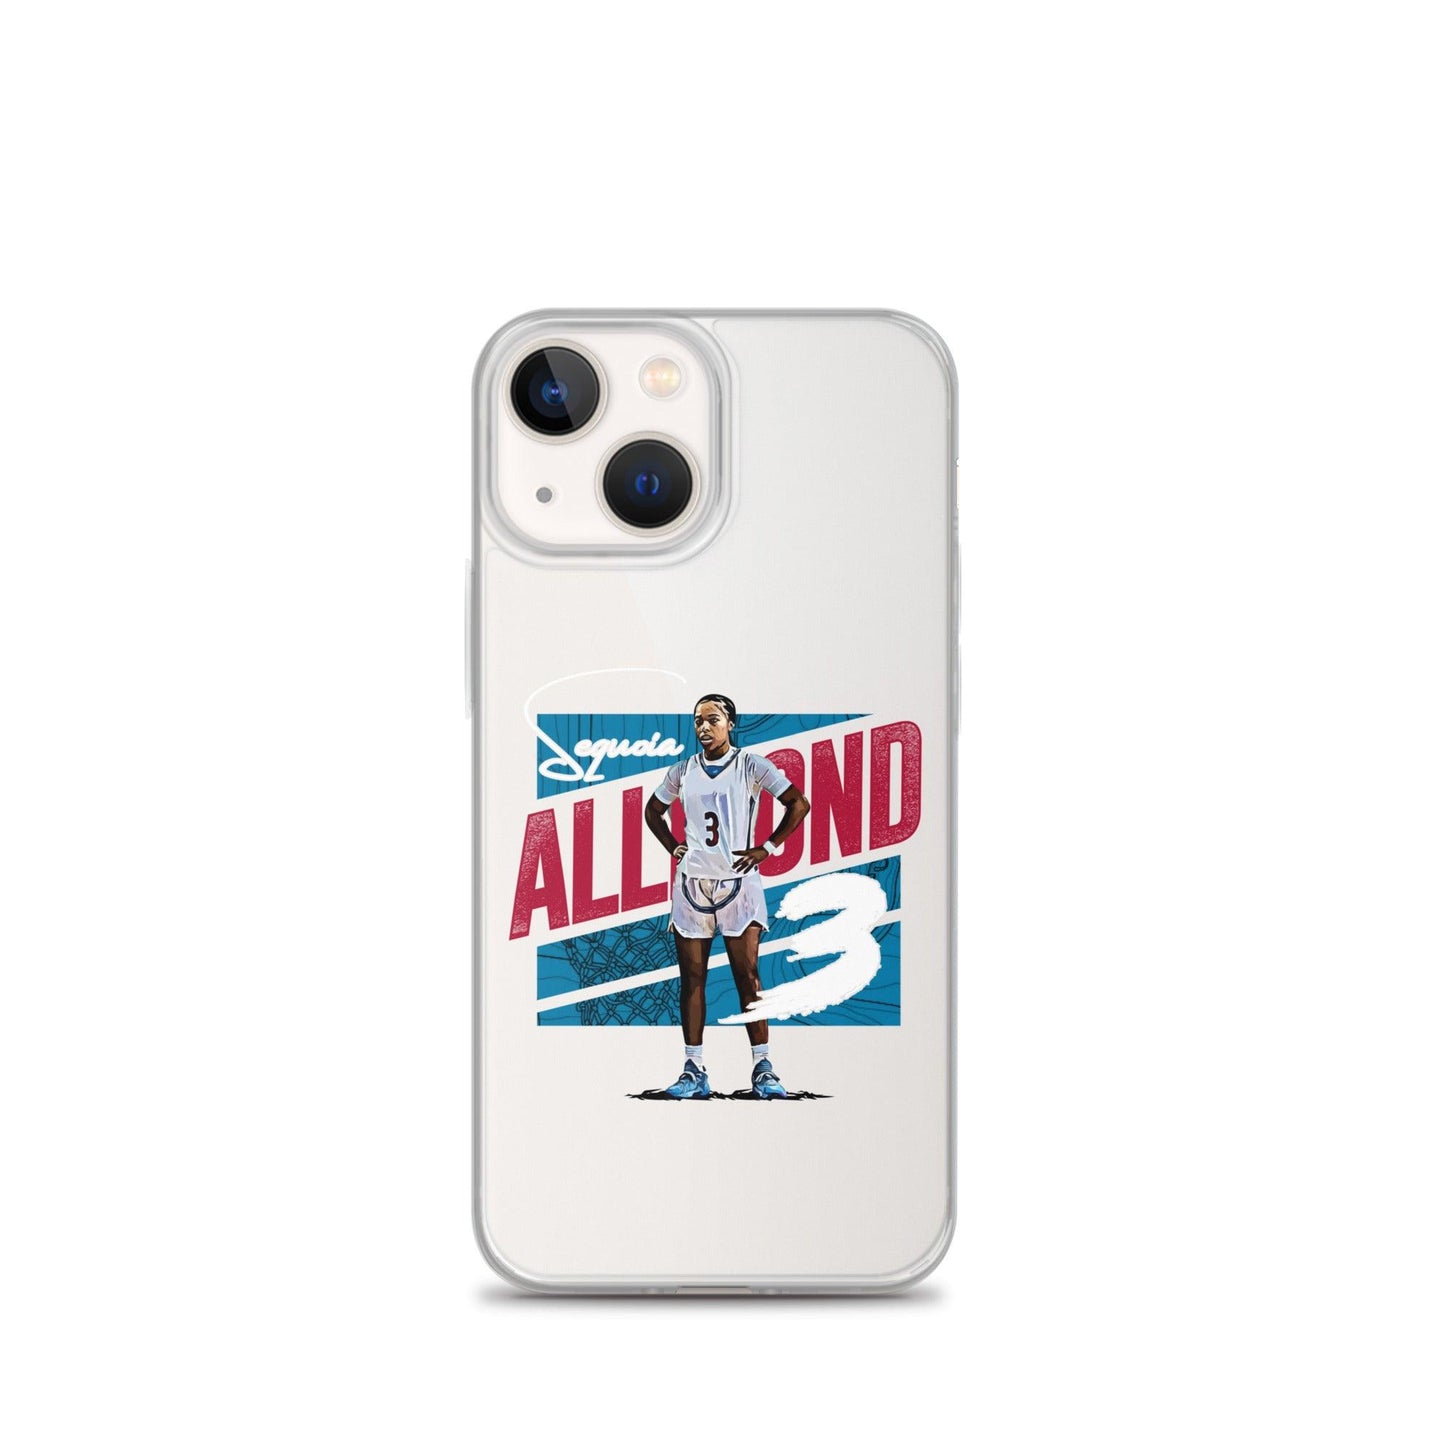 SeQuoia Allmond "Gametime" iPhone Case - Fan Arch